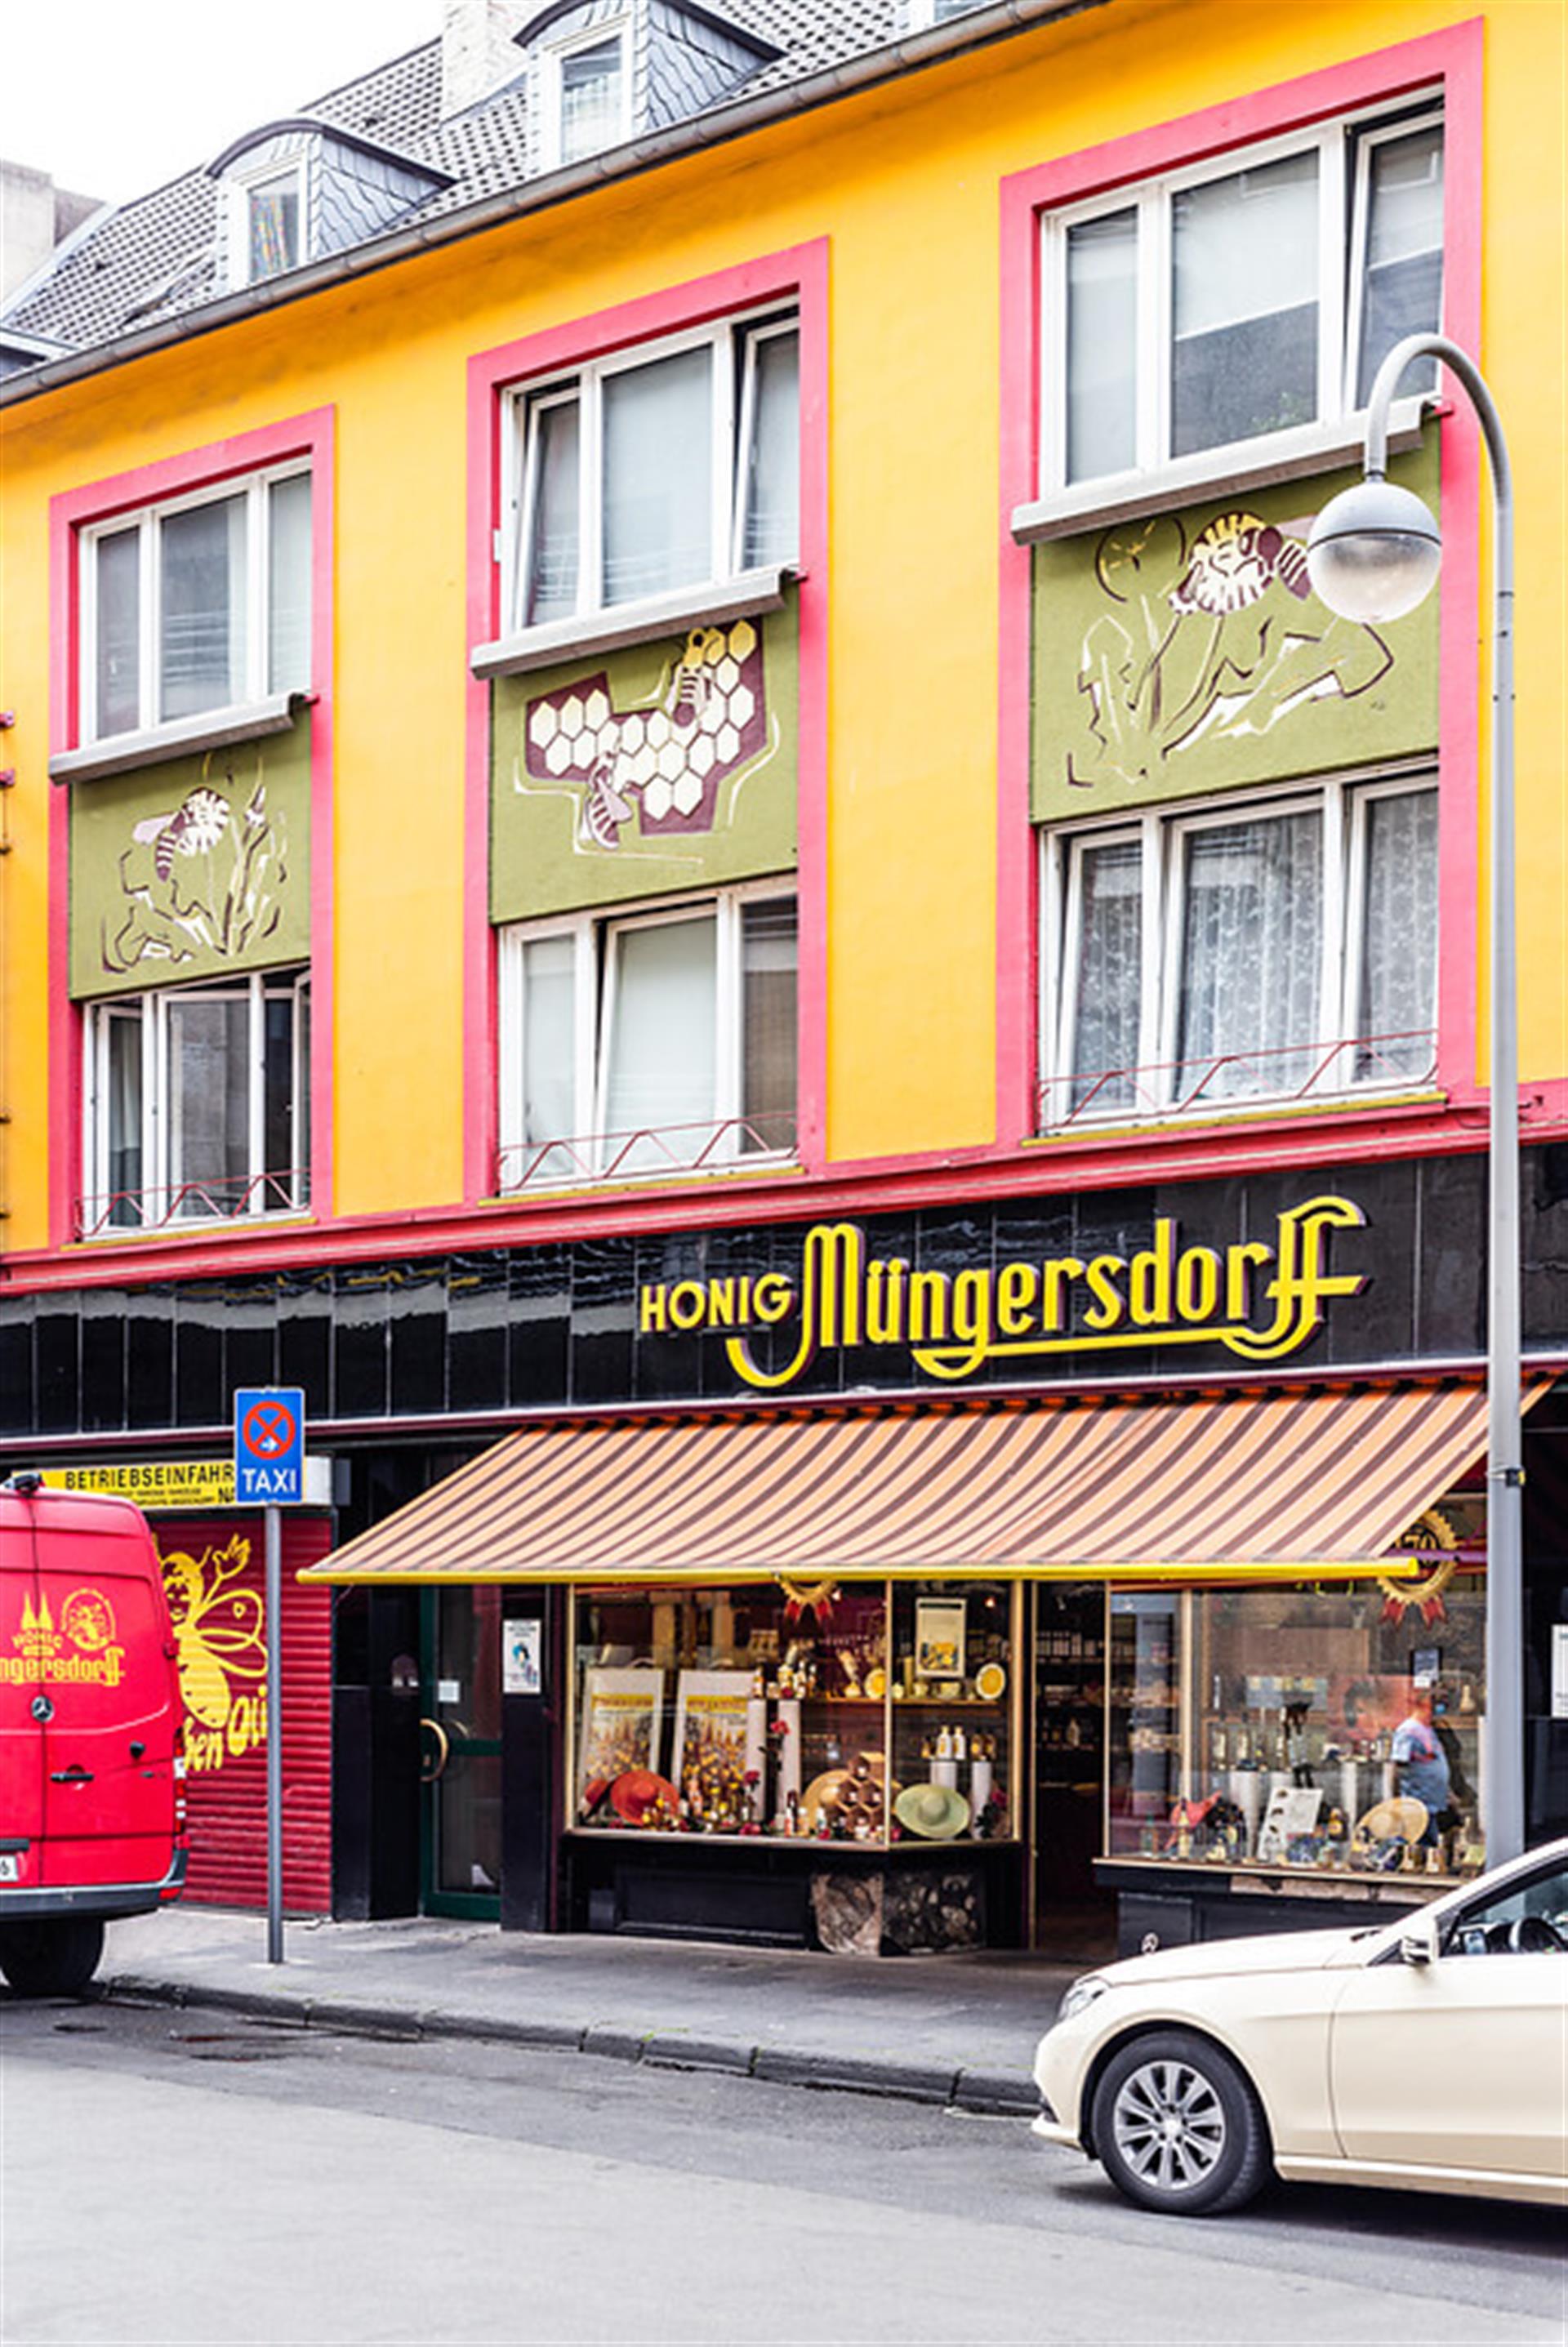 Honigbienen-Sgraffito über dem Geschäft "Honig Müngersdorff" in der Kölner Innenstadt (2020) &copy; Sebastian Löder / CC BY 4.0